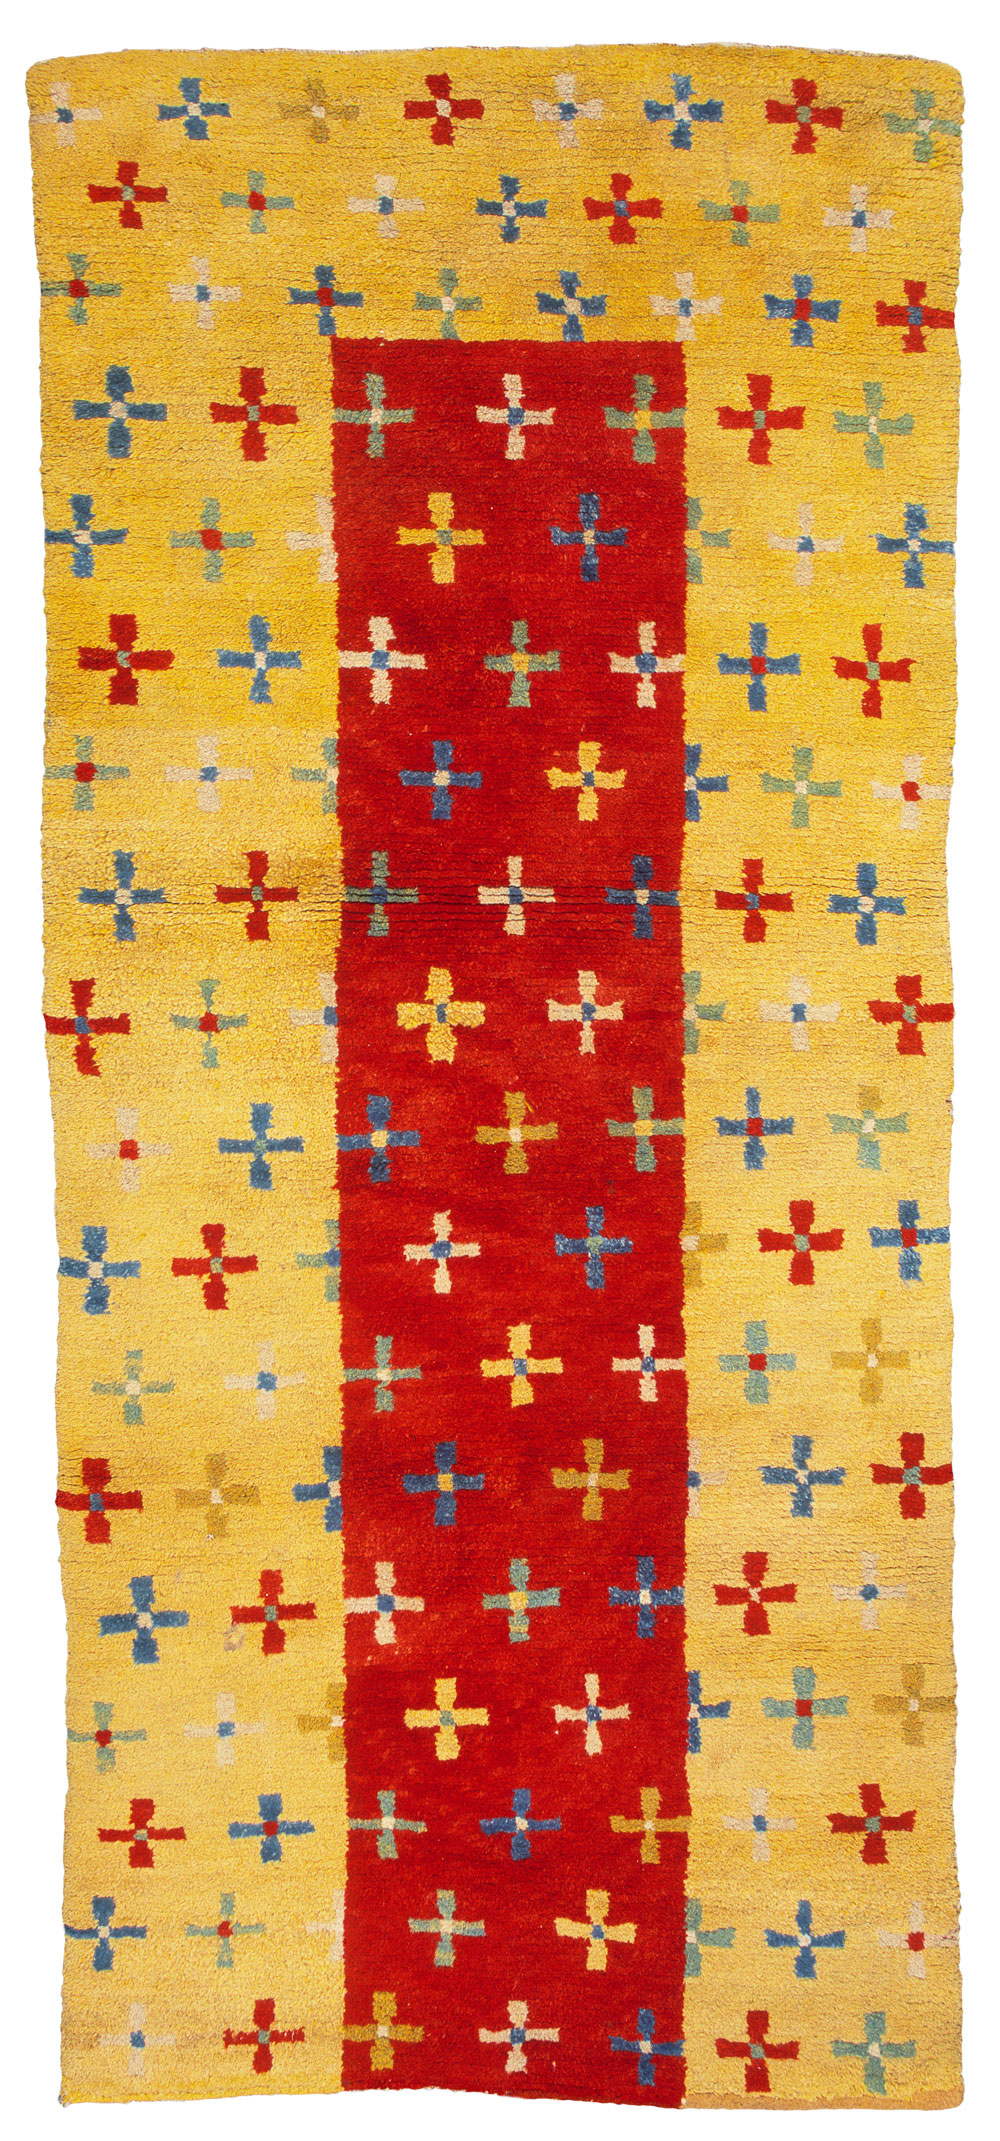 Tibetan rugs at Cologne Fine Art 2014, 'Tie-dye-Crosses' Rug, circa 1900, 180 x 80 cm